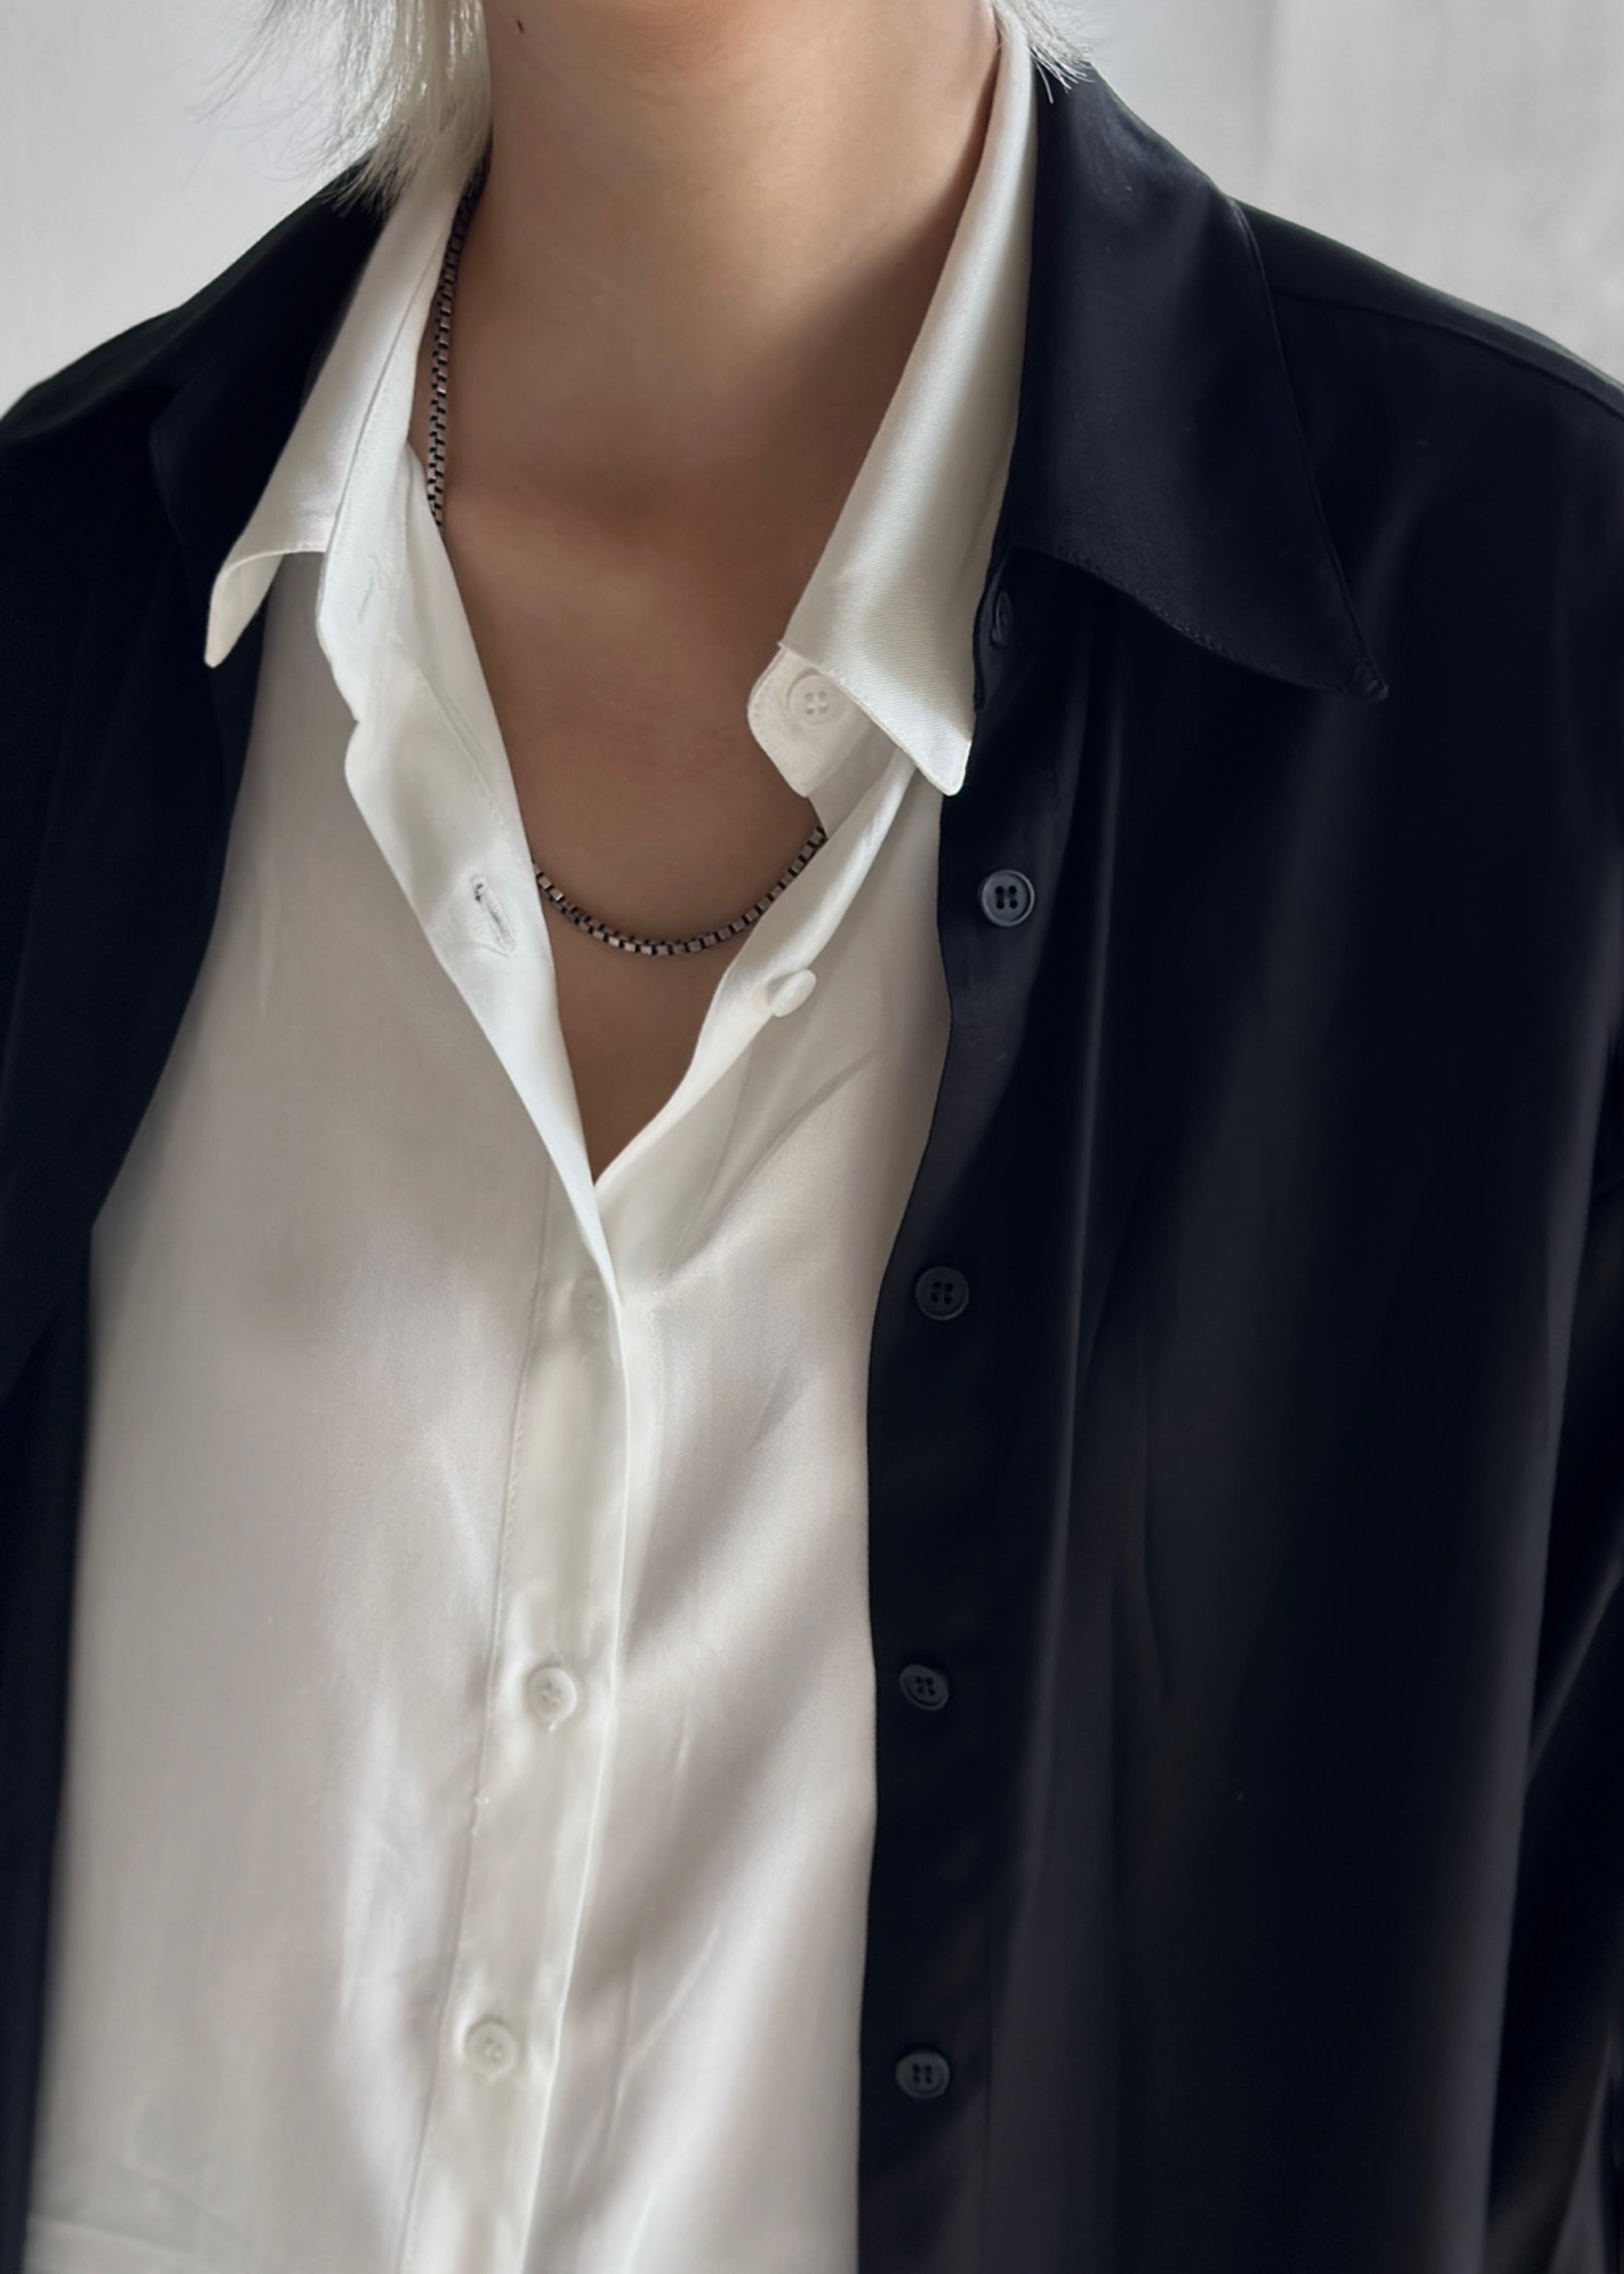 Ann Double Layer Shirt - Black/White - 13